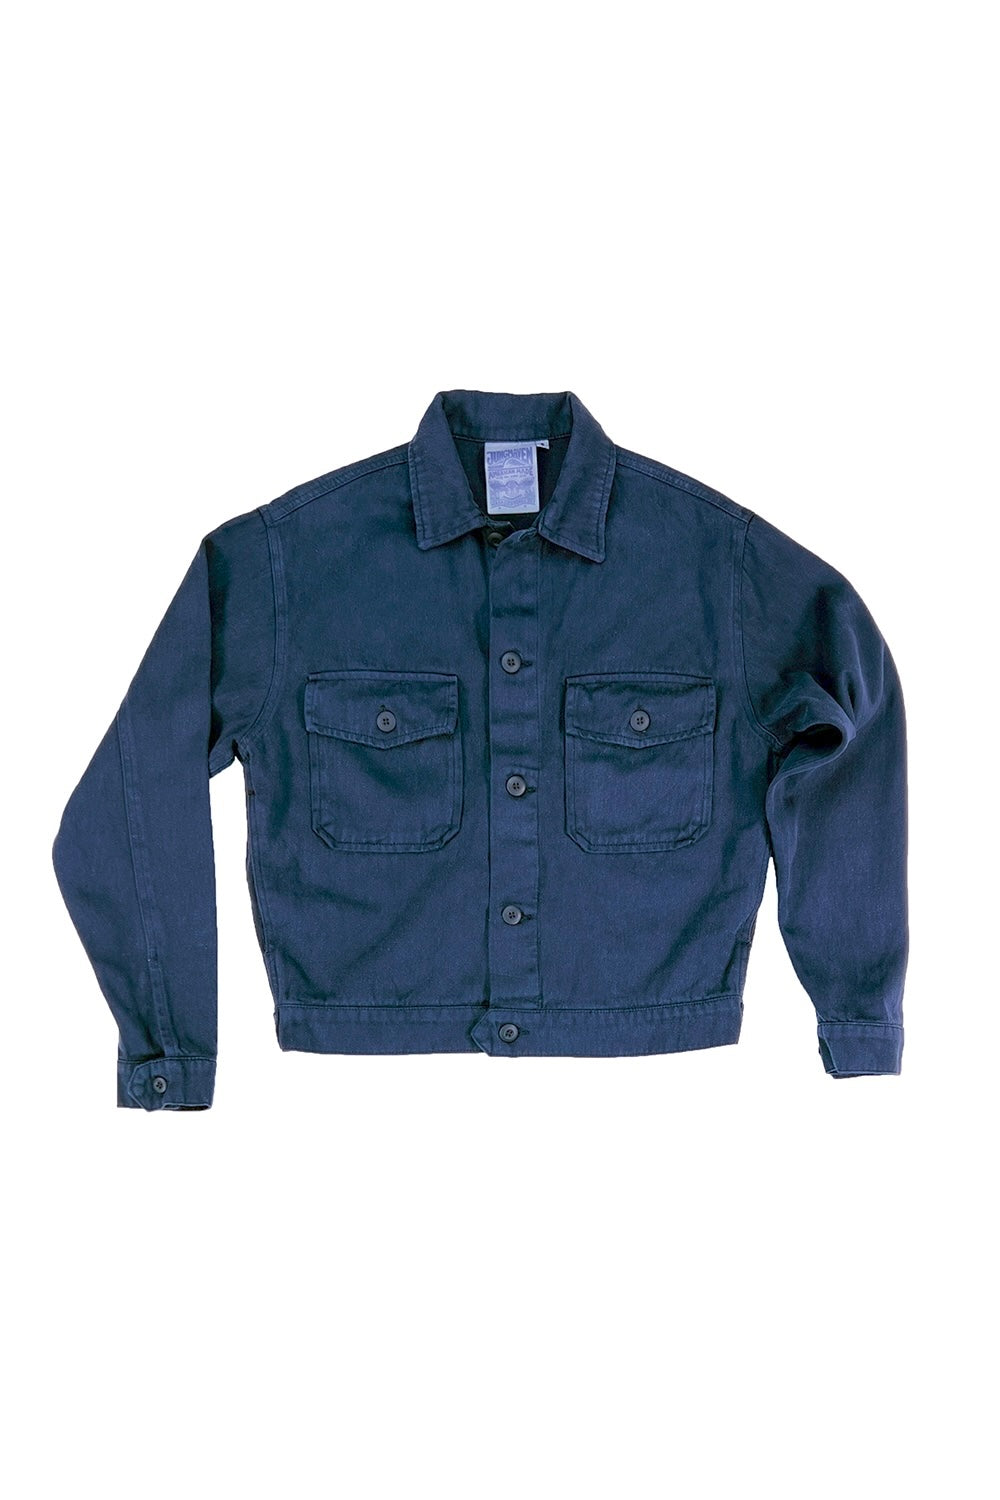 Mechanic Jacket | Jungmaven Hemp Clothing & Accessories / Color: Navy